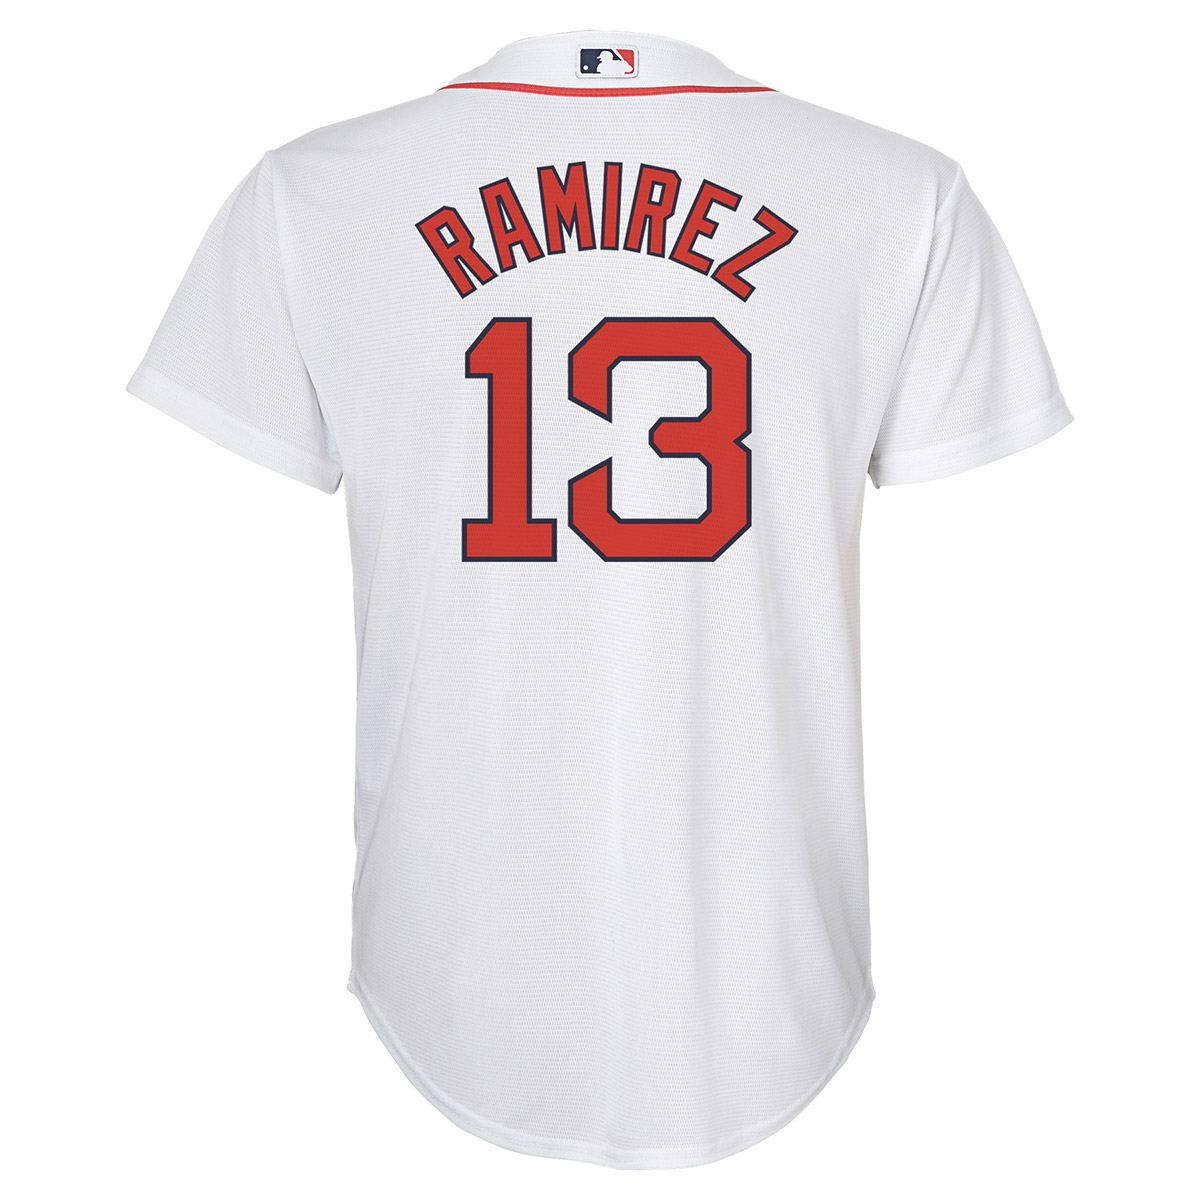 Nike, Shirts, Manny Ramirez Boston Red Sox Jersey